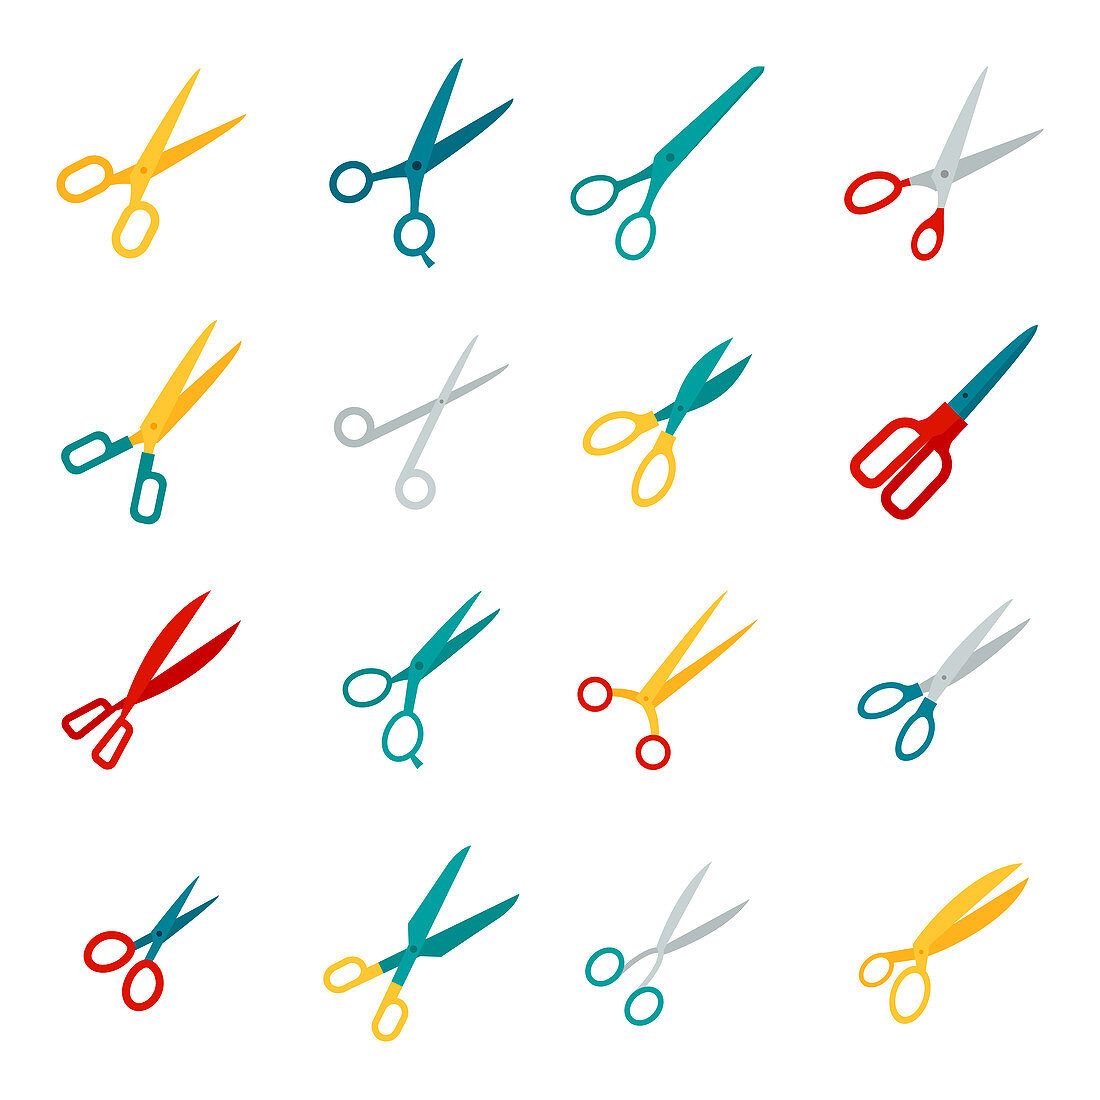 Scissor icons, illustration